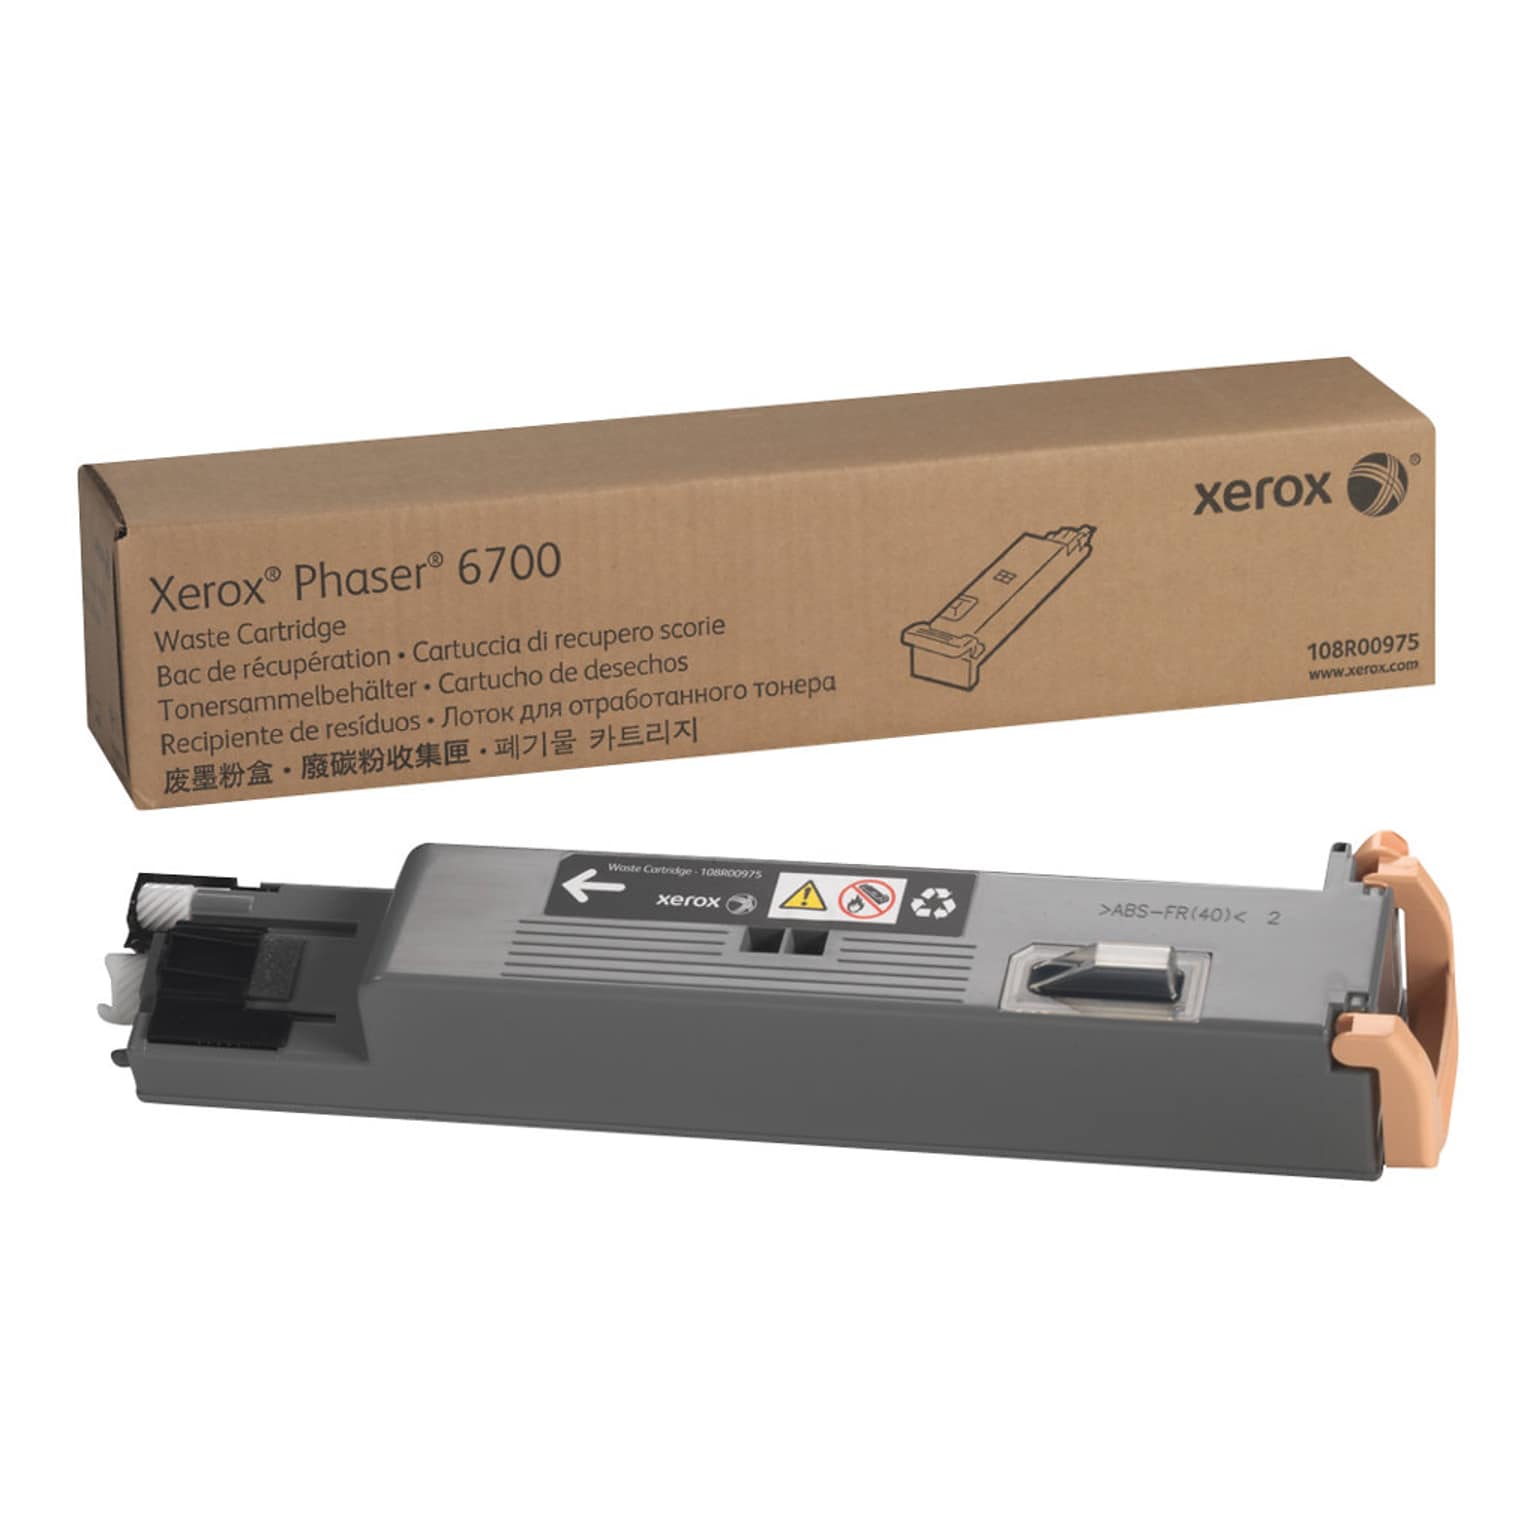 Xerox Phaser 6700 108R00975 Waste Cartridge